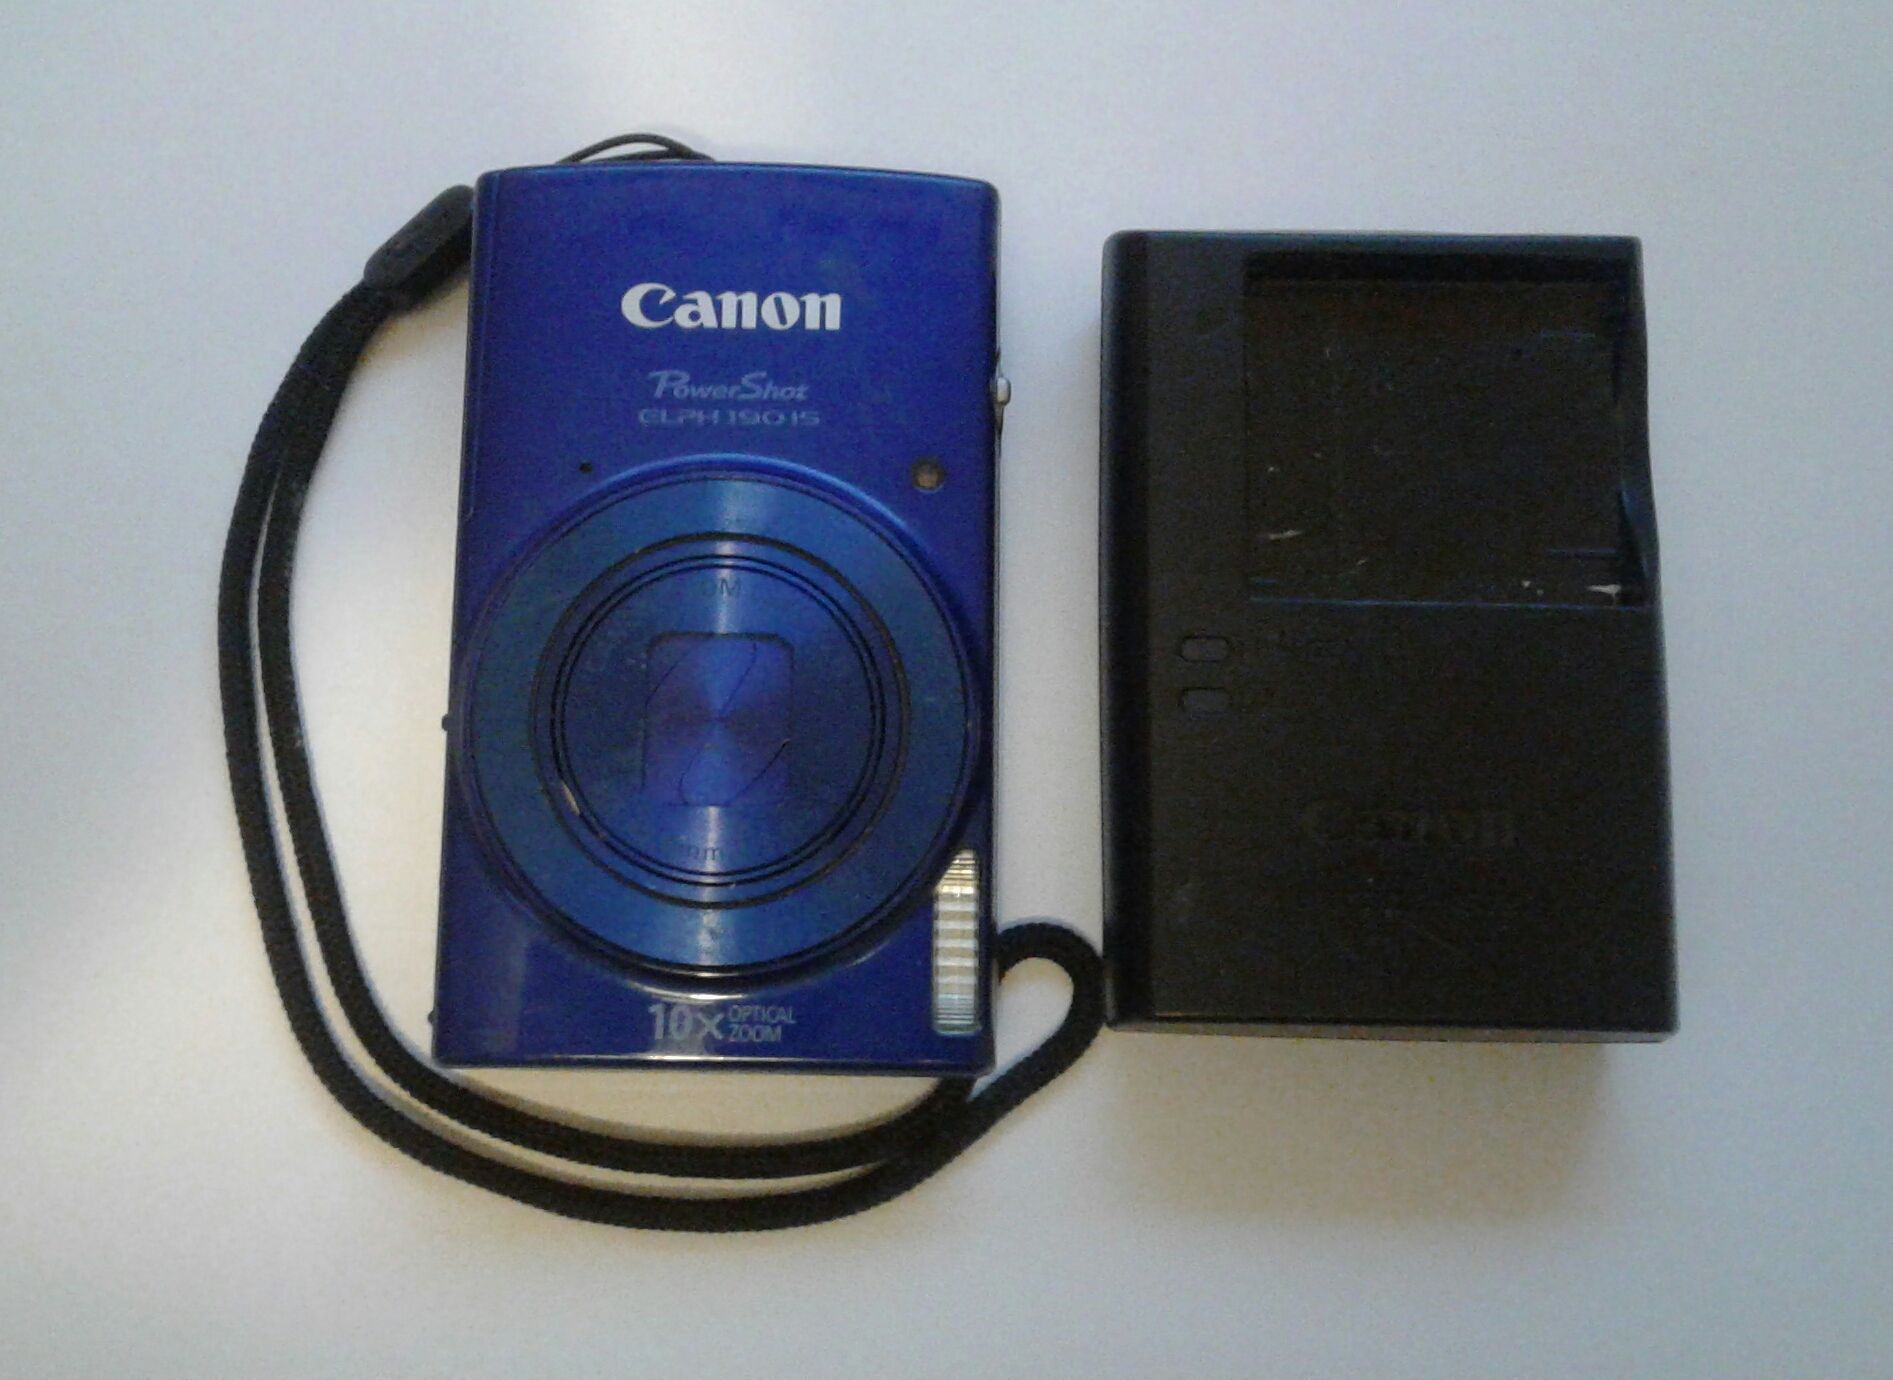 Canon Power Shot digital camera